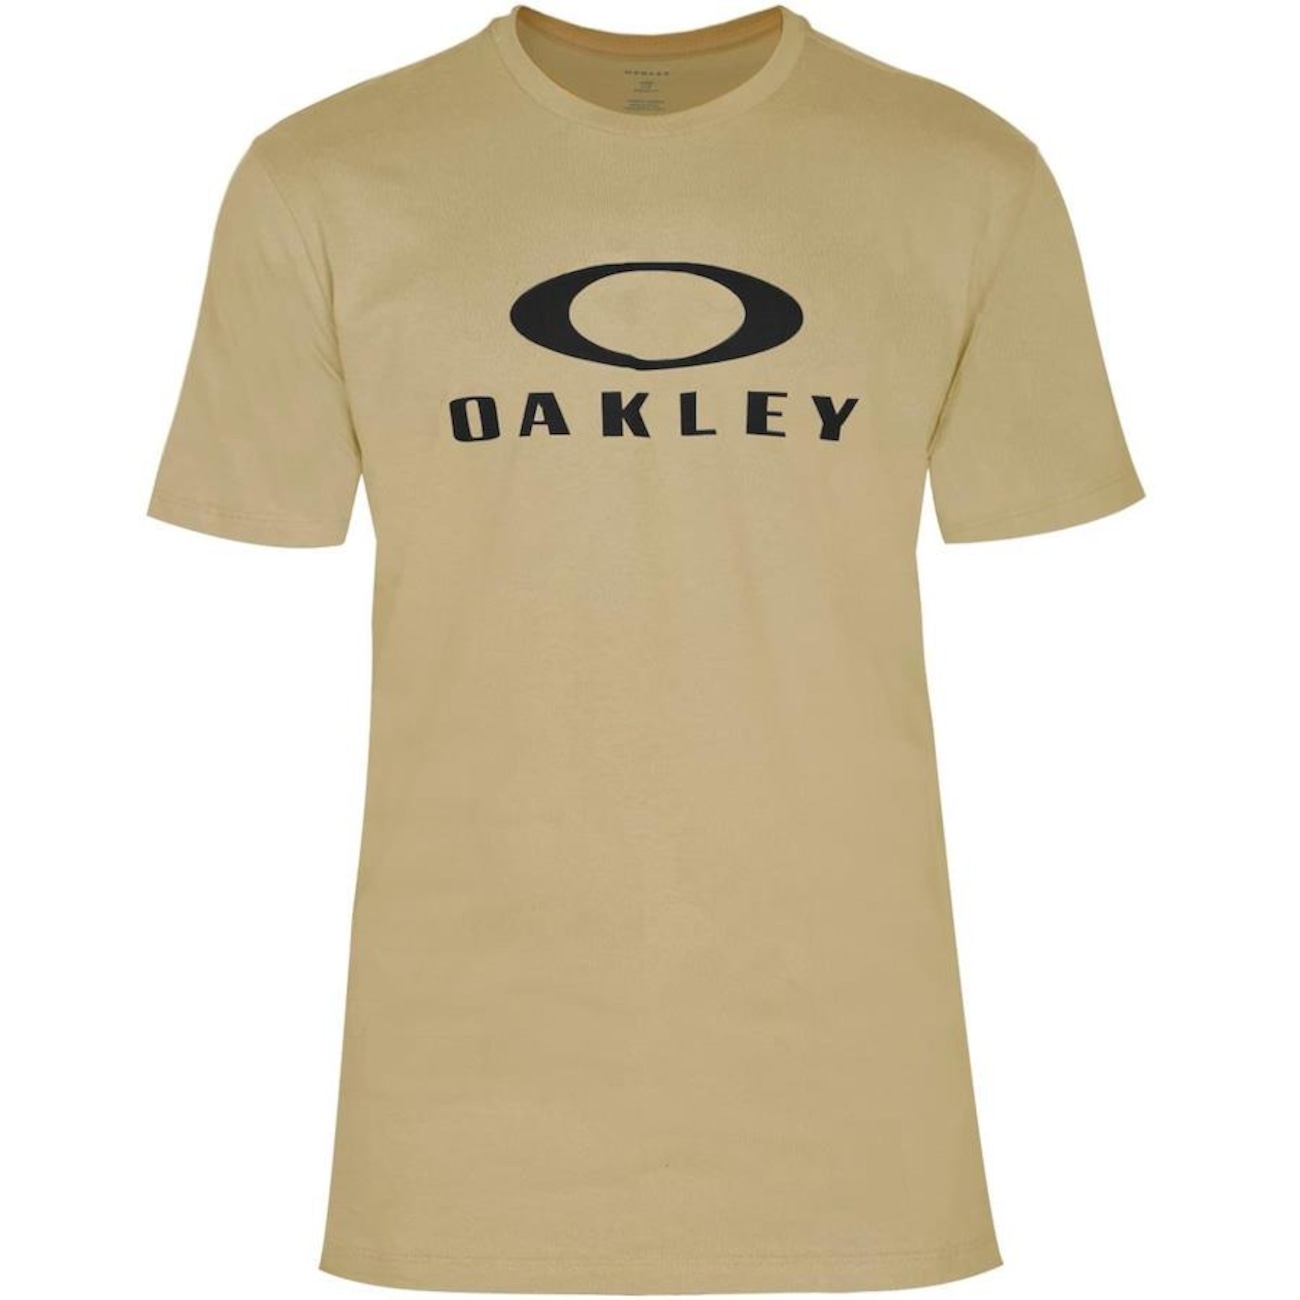 Camiseta Oakley Manga Longa Bark Heather Tee Branca Original